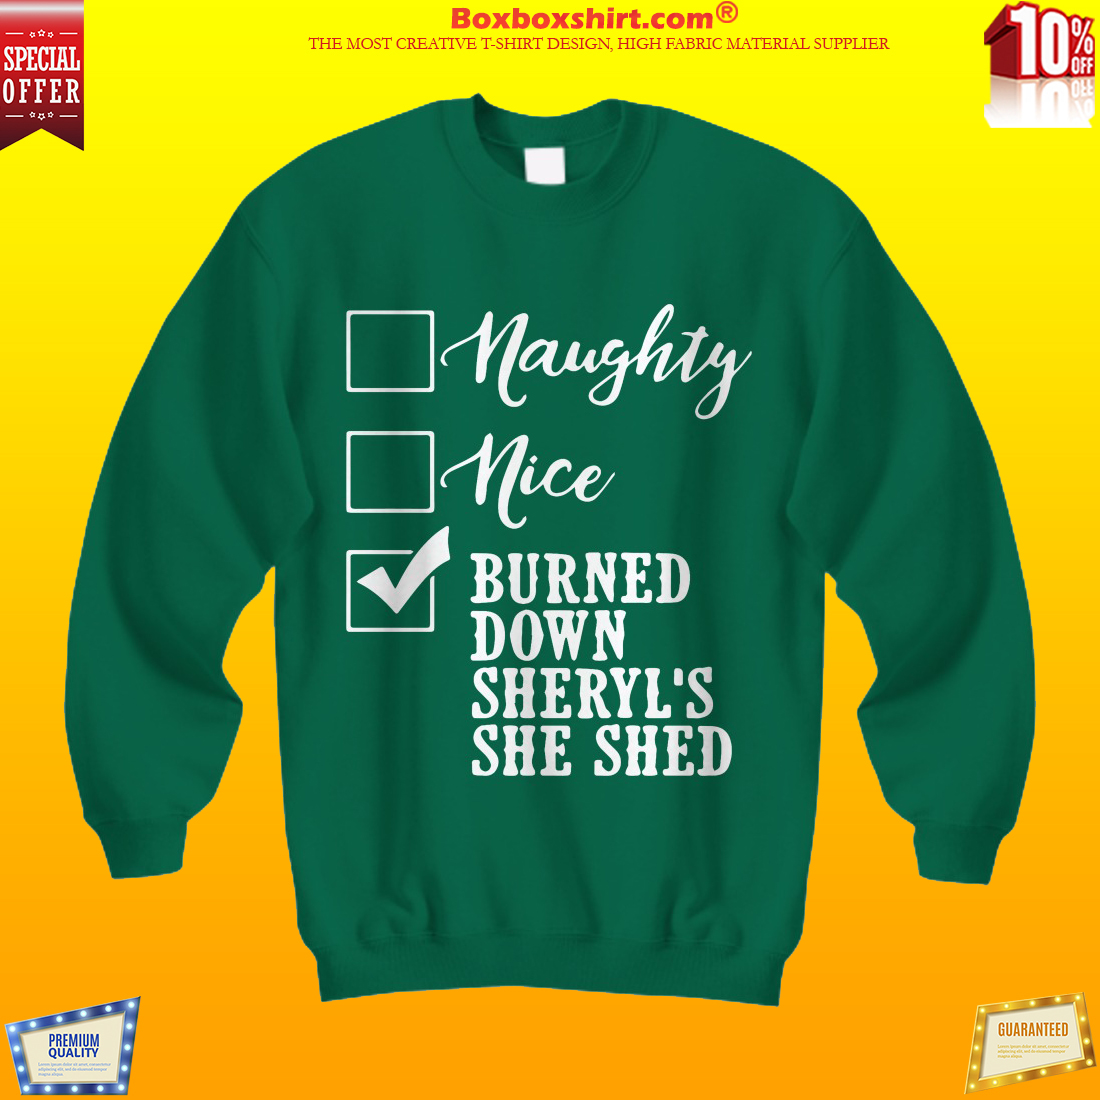 Naughty nice burned down sheryl's she shed shirt and hoodies